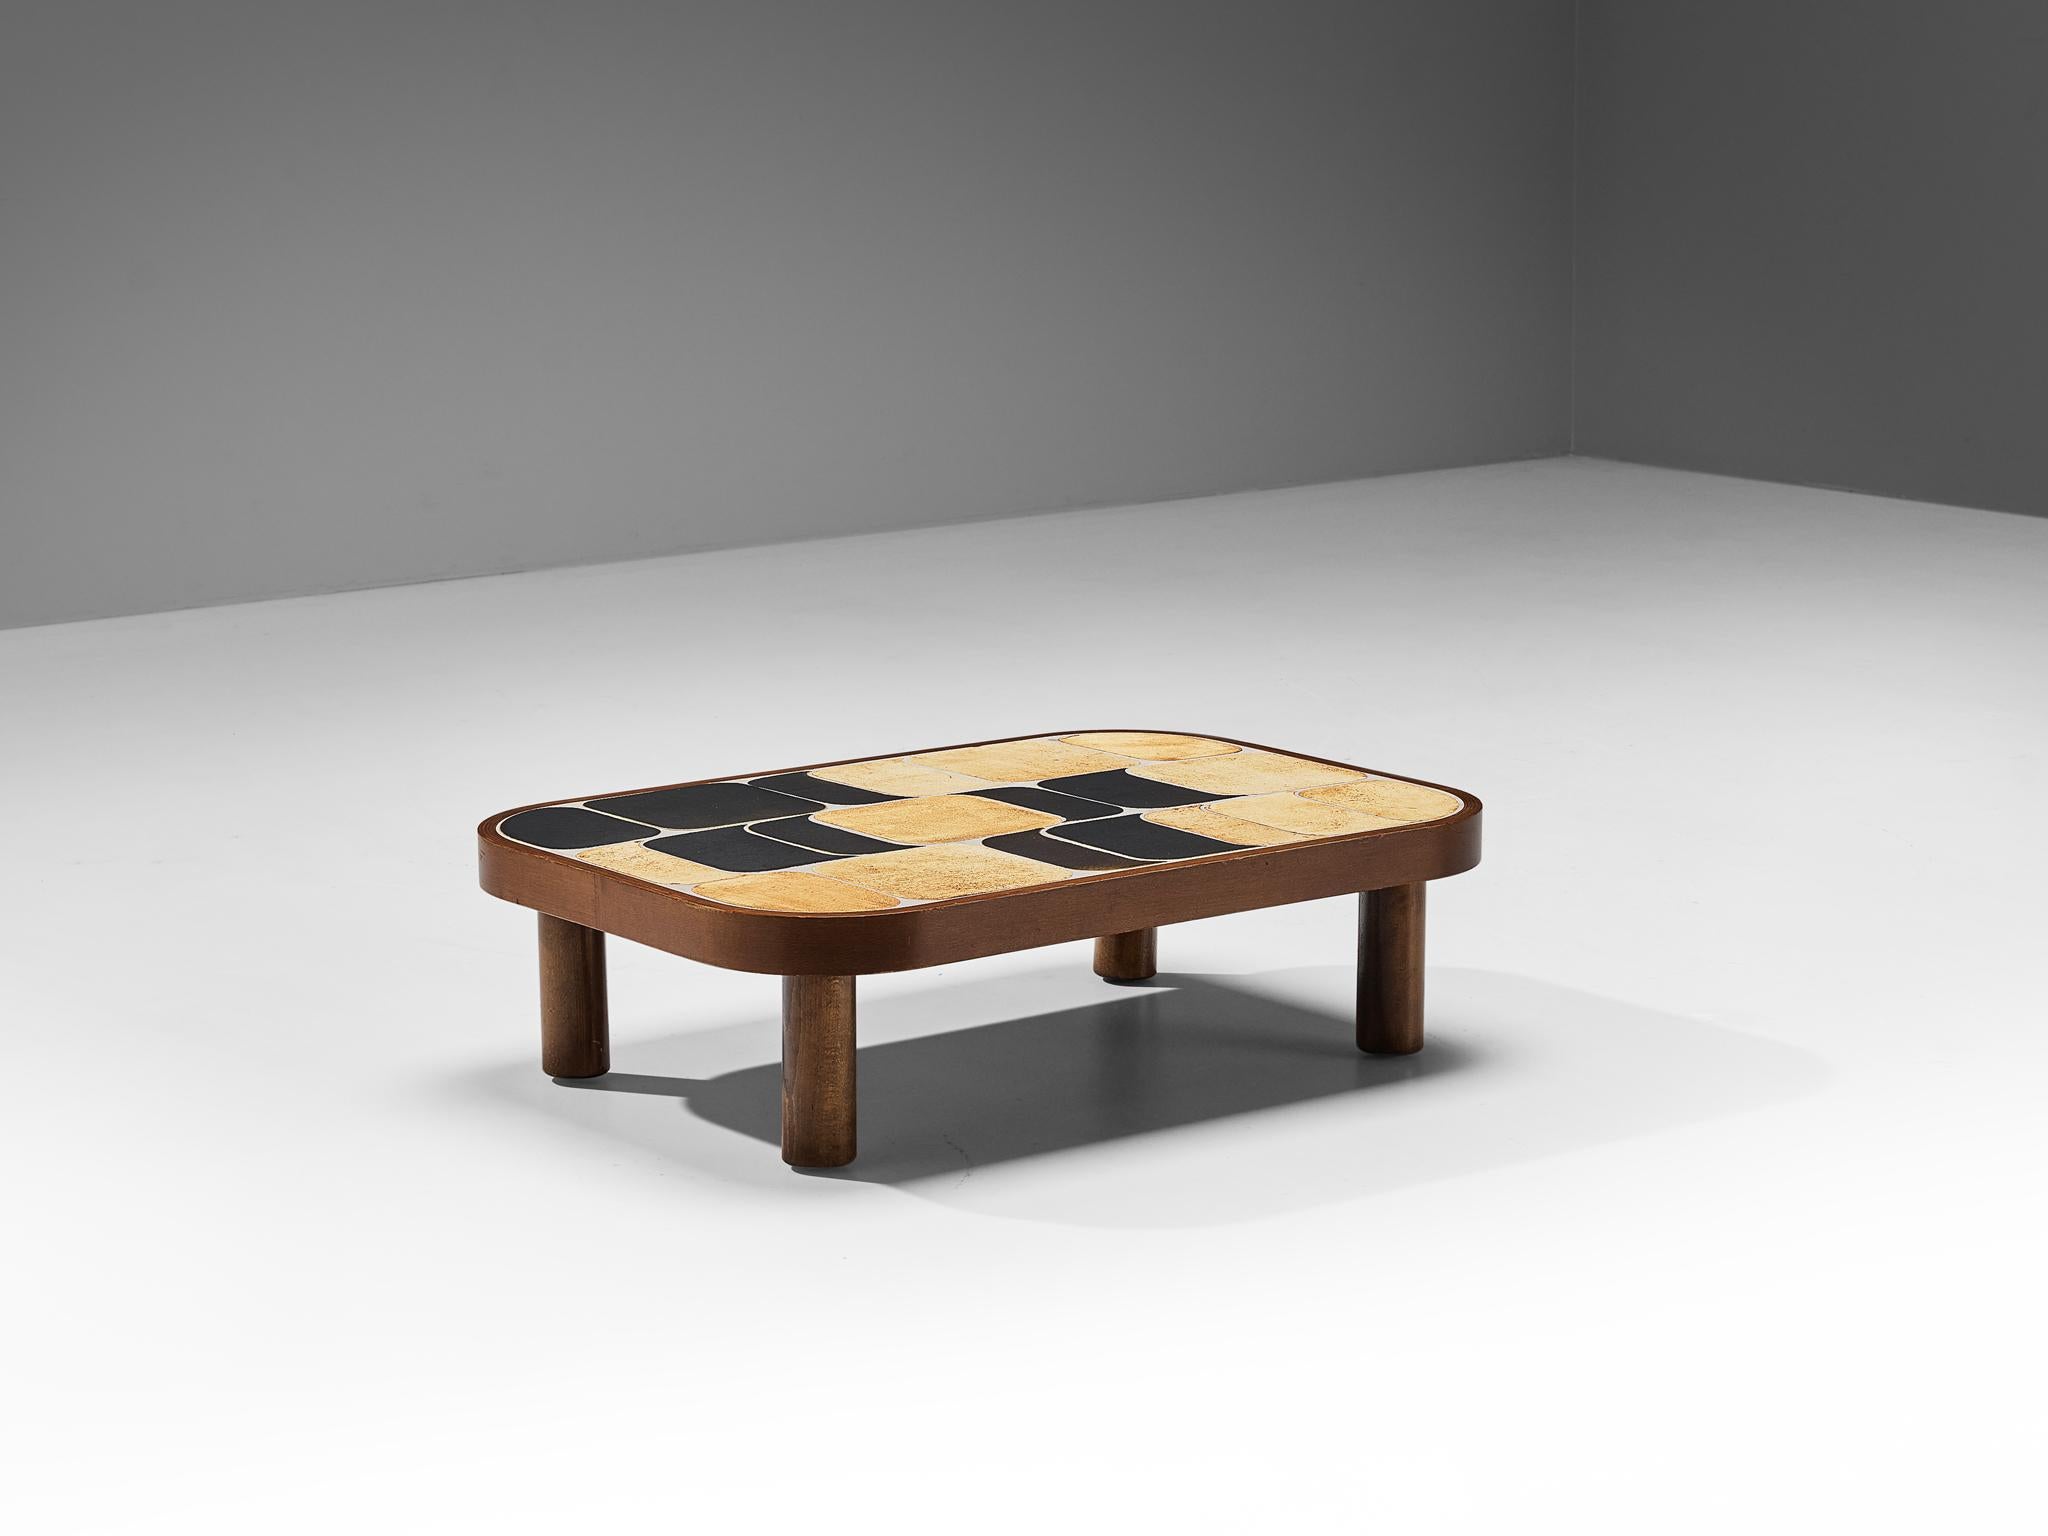 Mahogany Roger Capron ‘Shogun’ Coffee Table in Ceramic and Wood